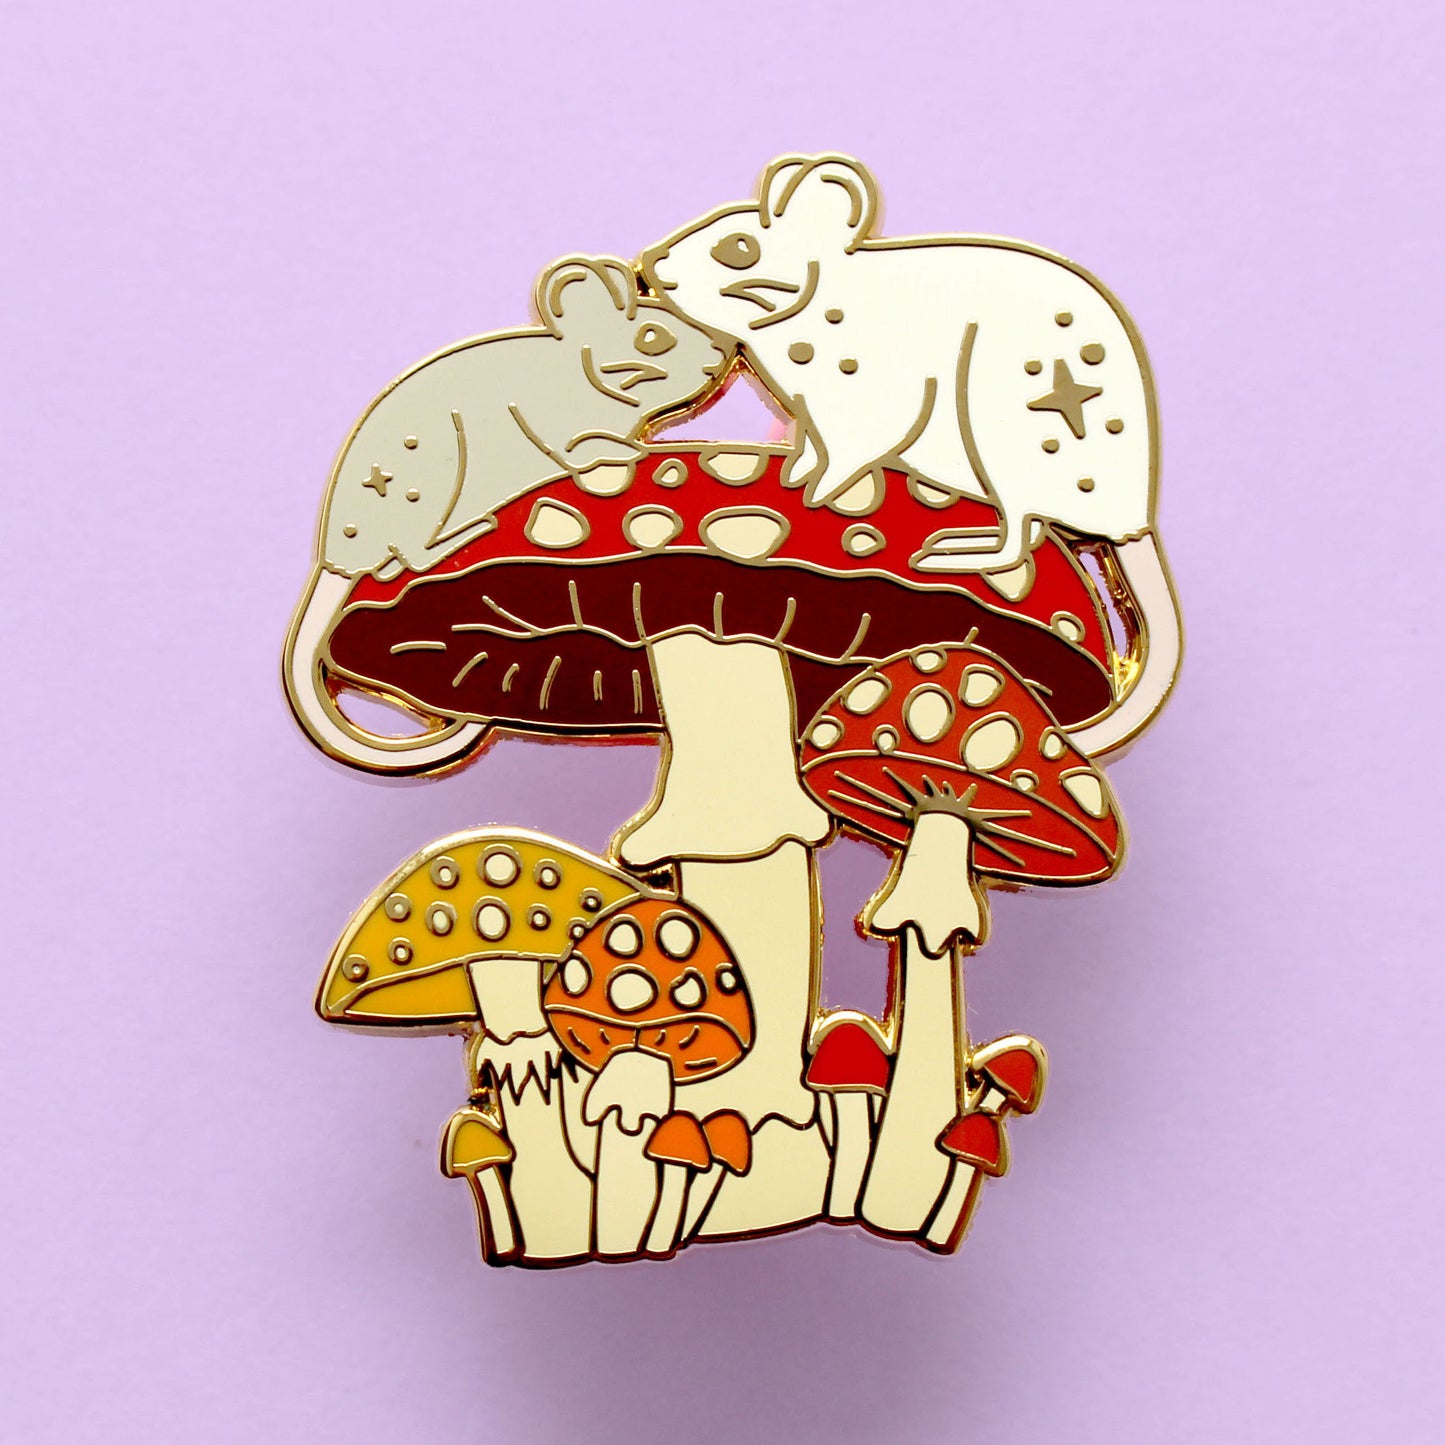 Mushroom Mice Enamel Pin – Autumn Fall Collection